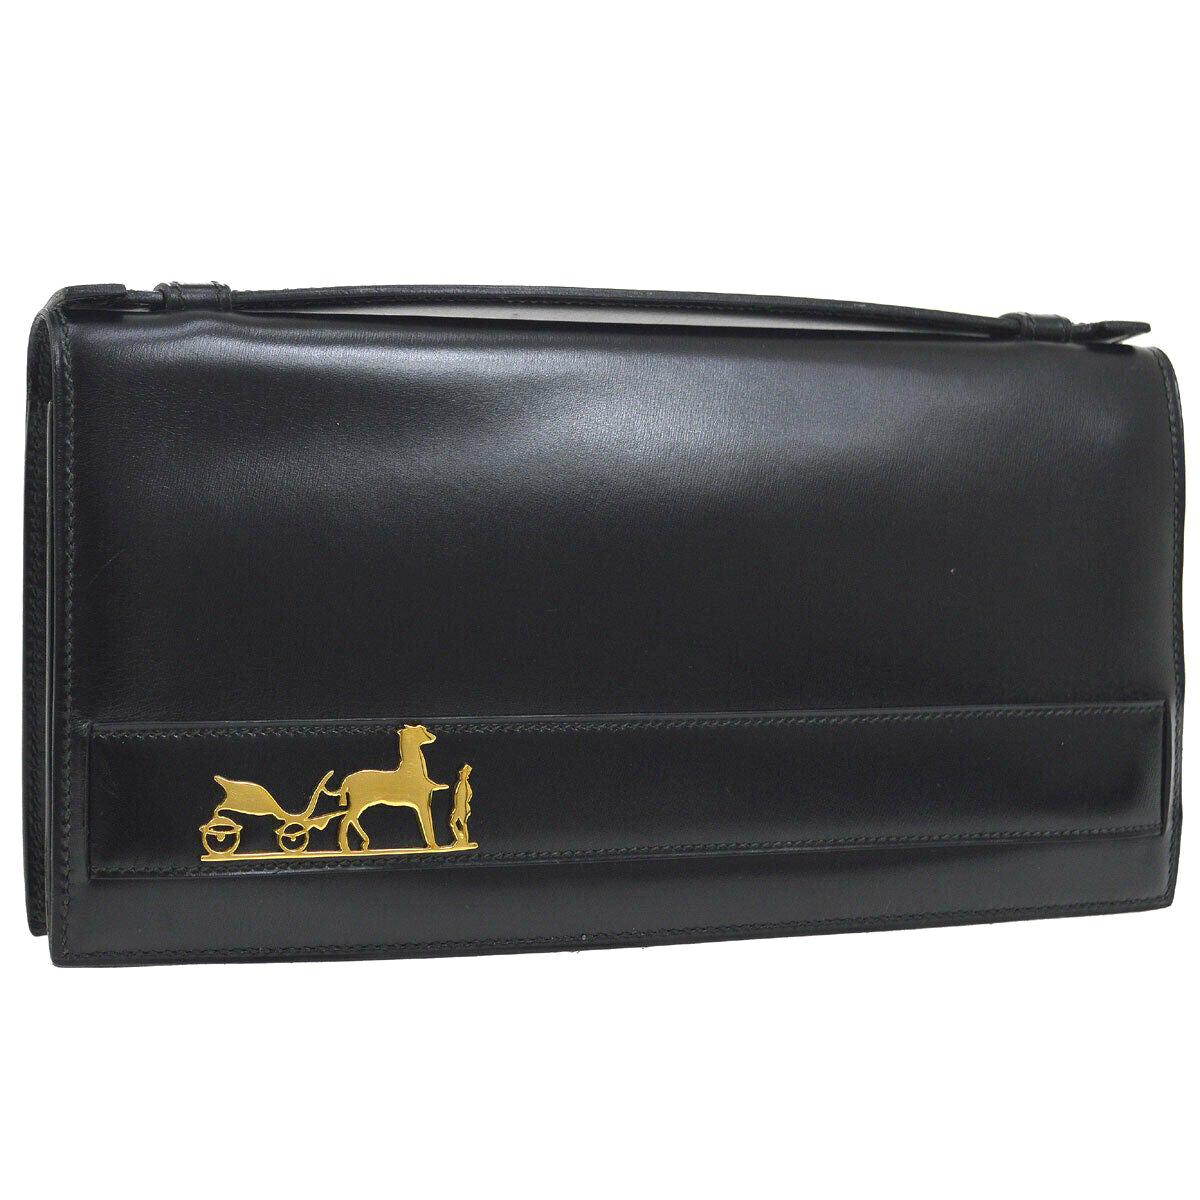 Hermes Black Leather Gold Emblem Evening Clutch Top Handle Satchel Flap Bag